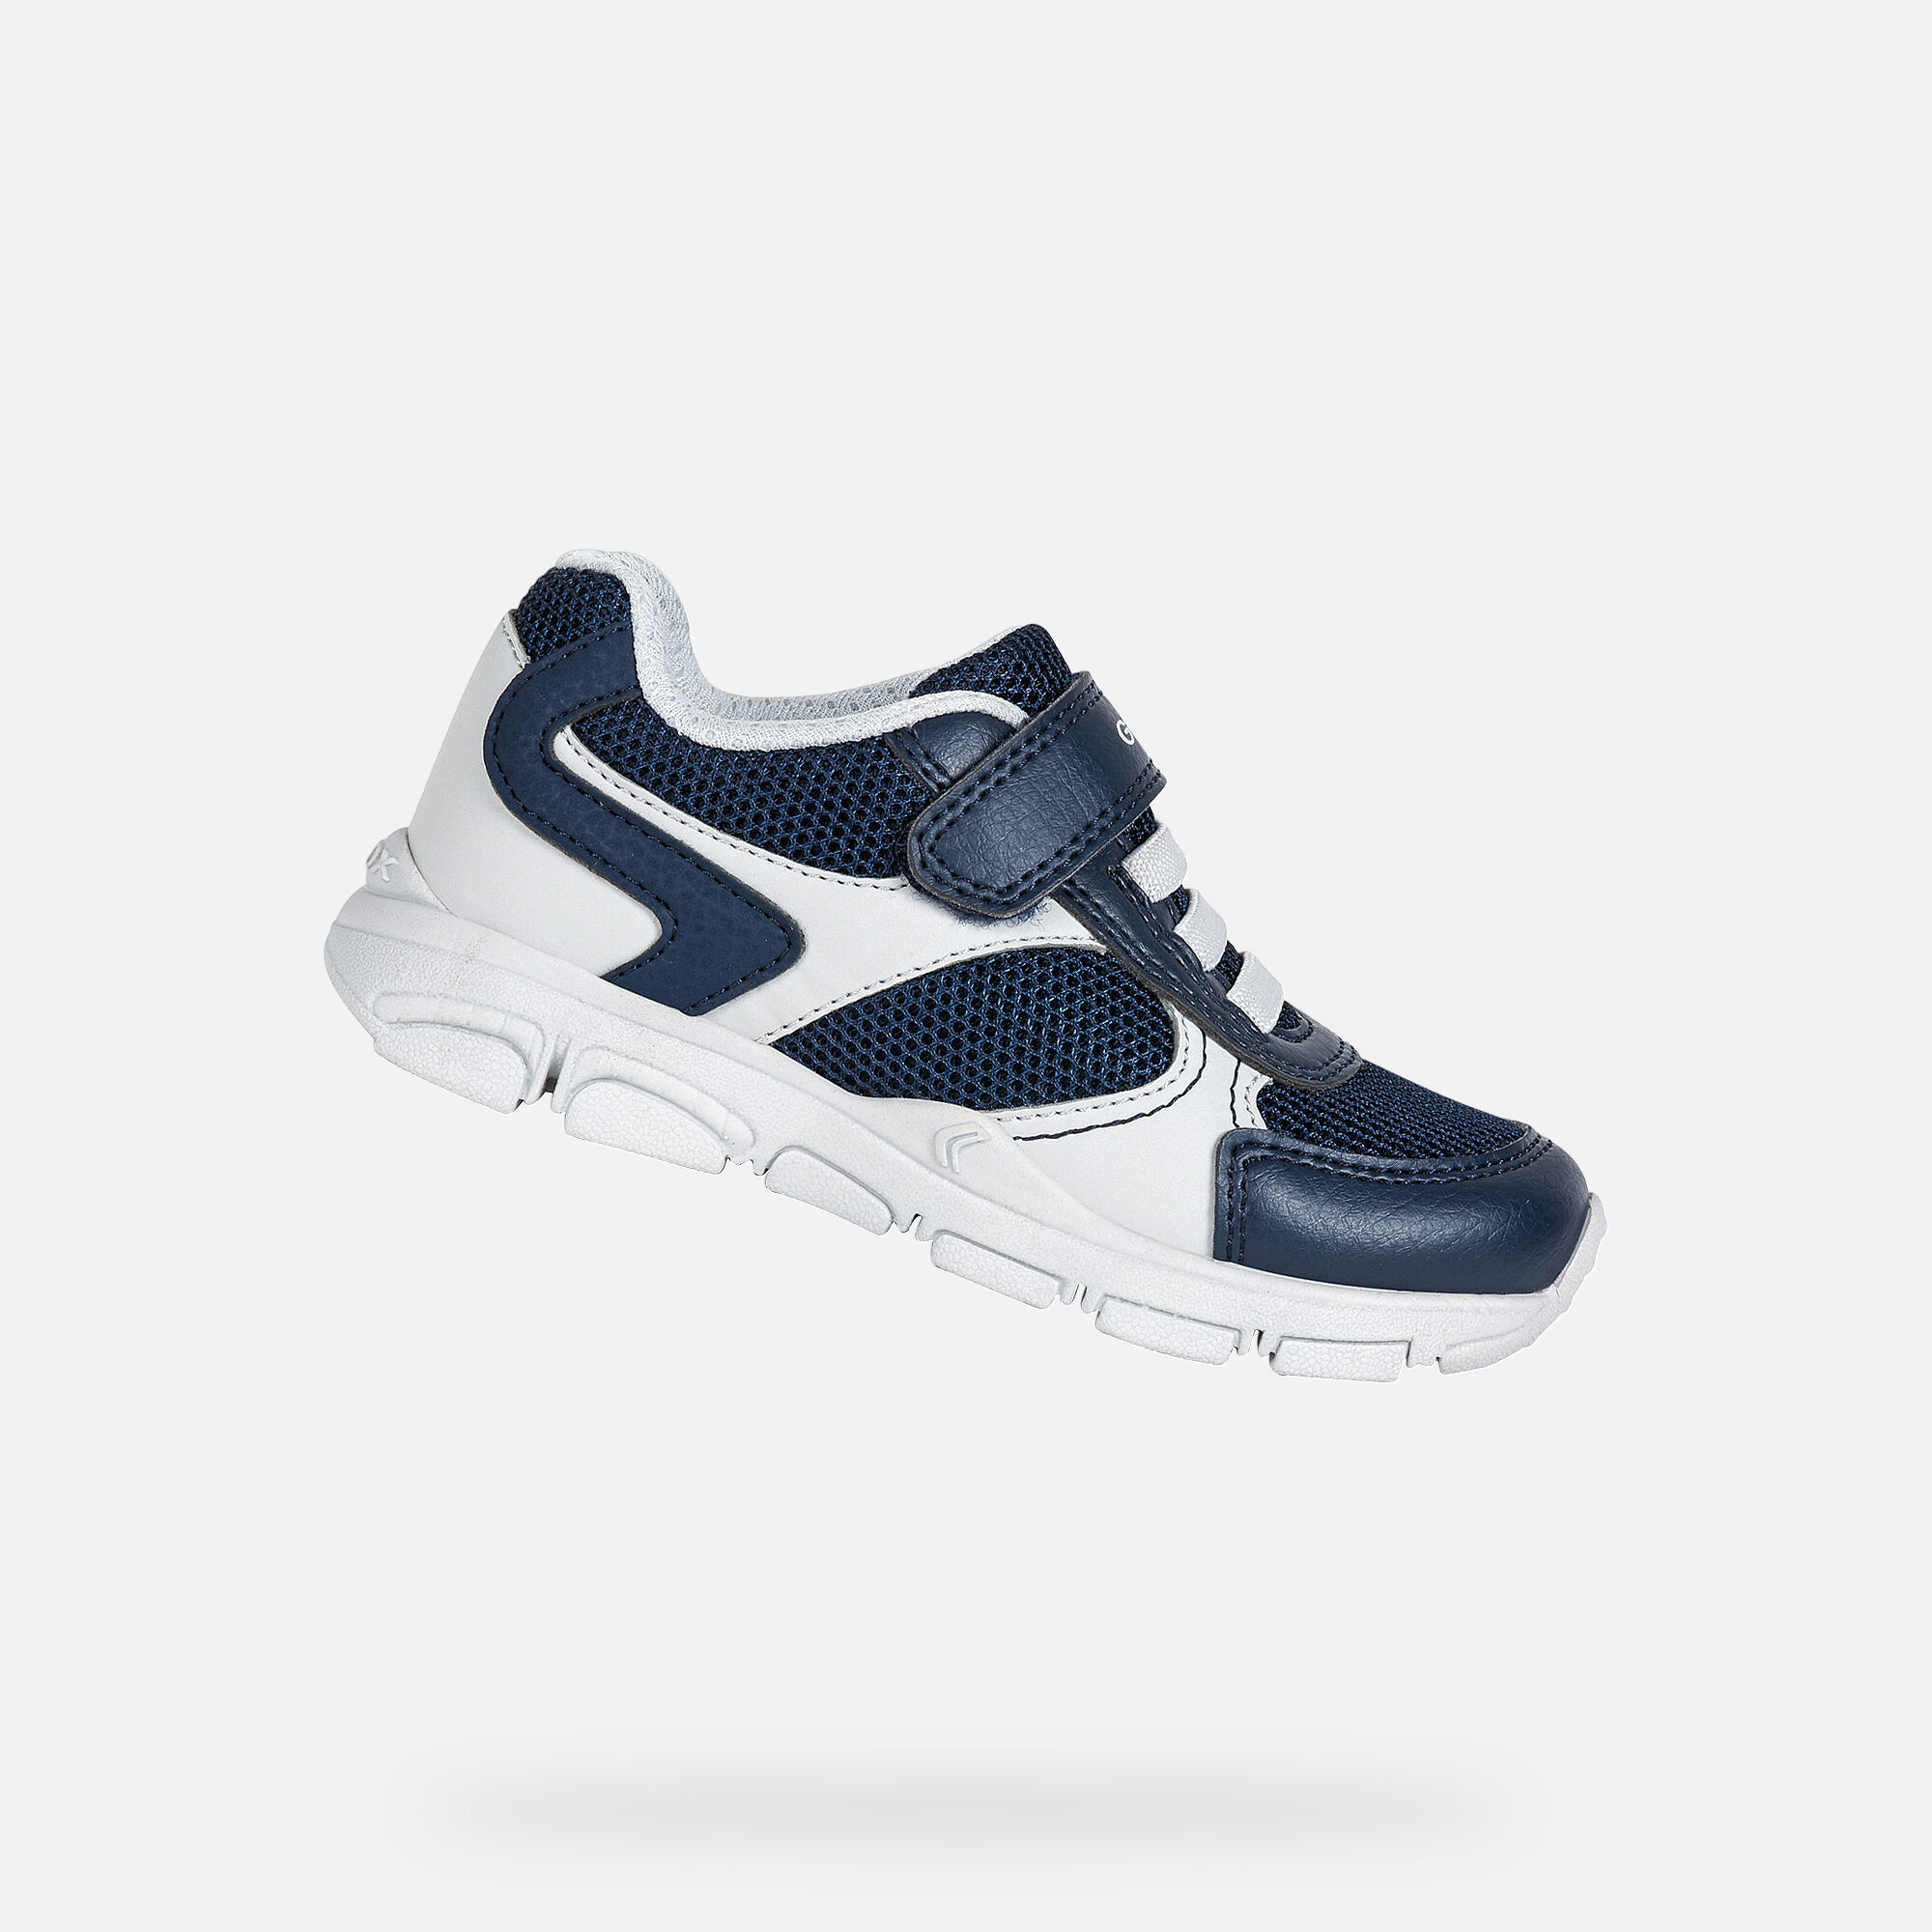 Geox NEW TORQUE BOY Sneakers Blu navy Bambino | Geox® A/I 2020